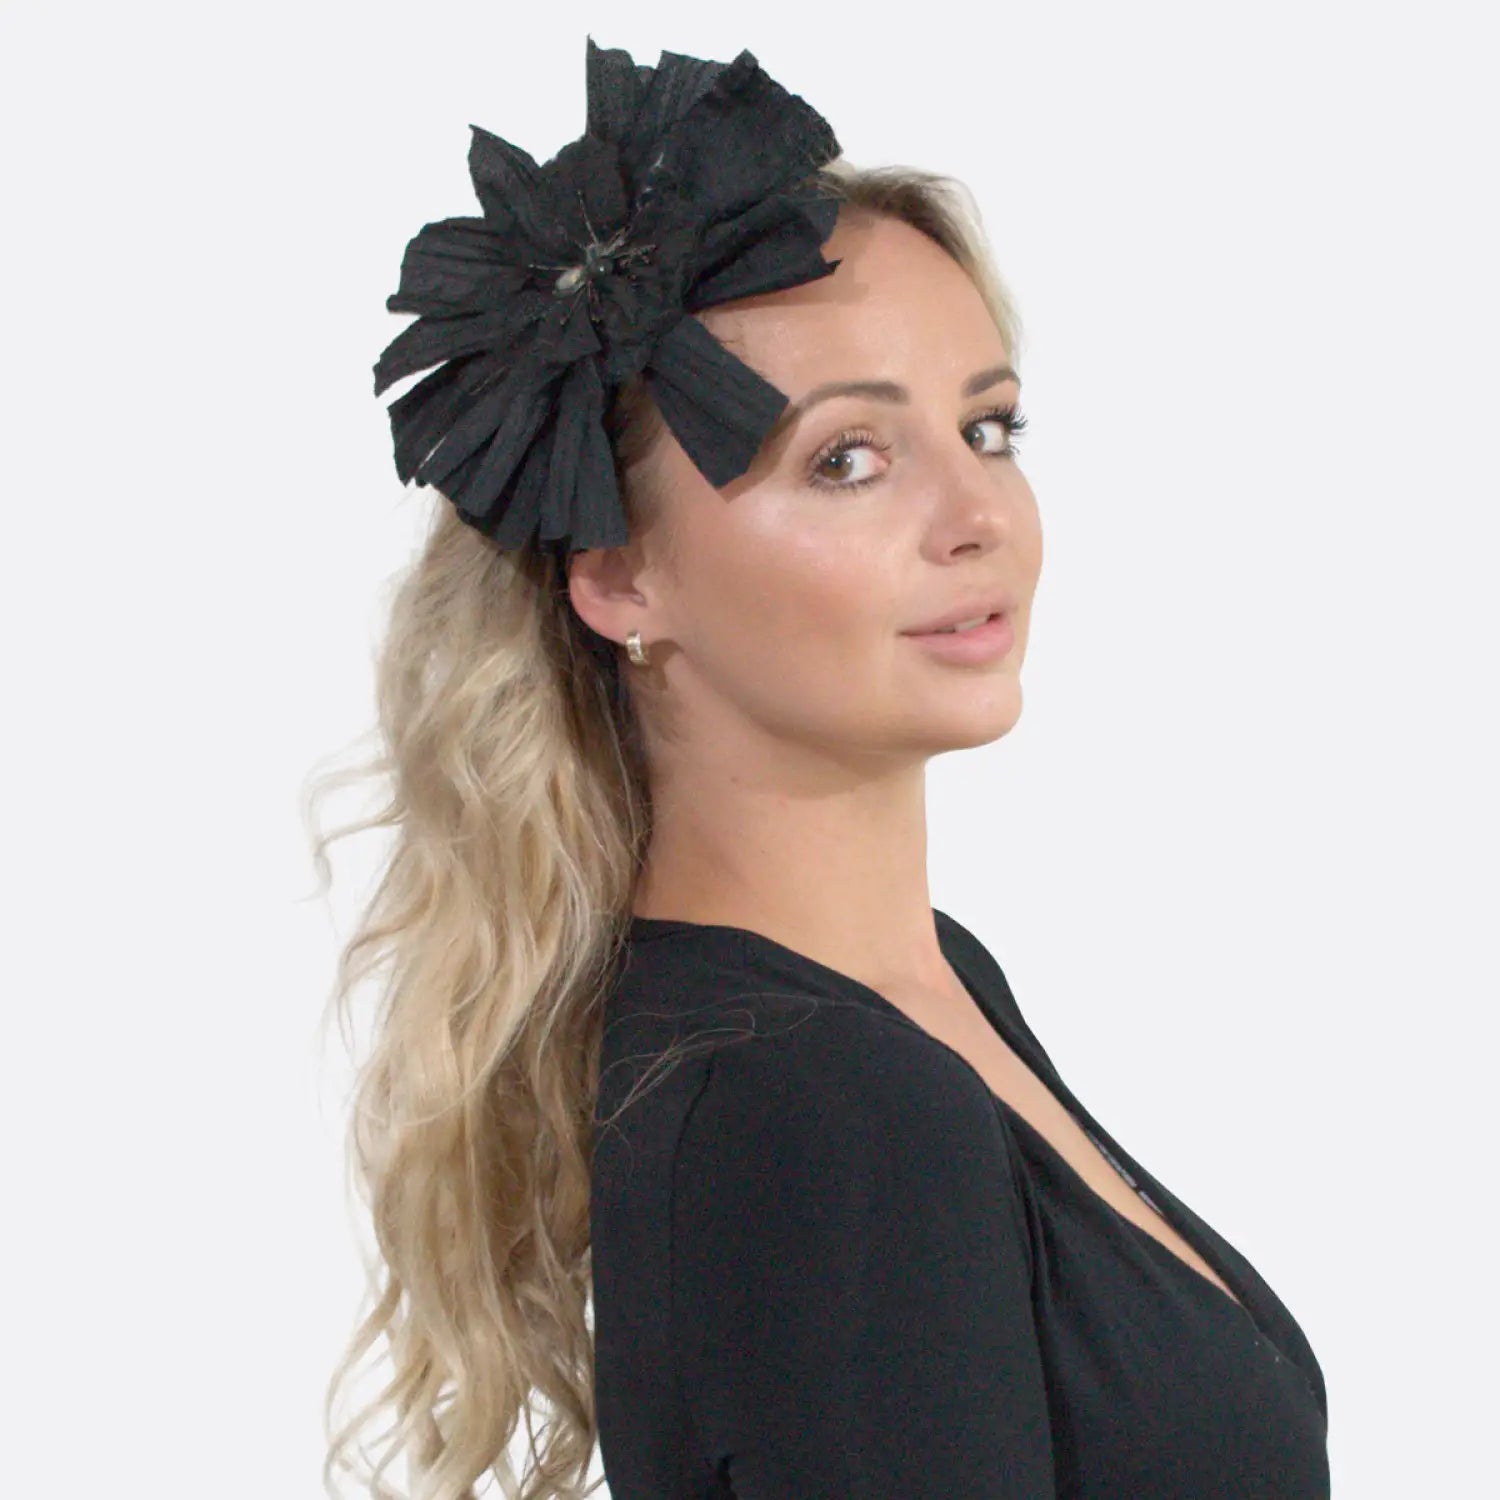 Black headband with large flower and rhinestone applique.